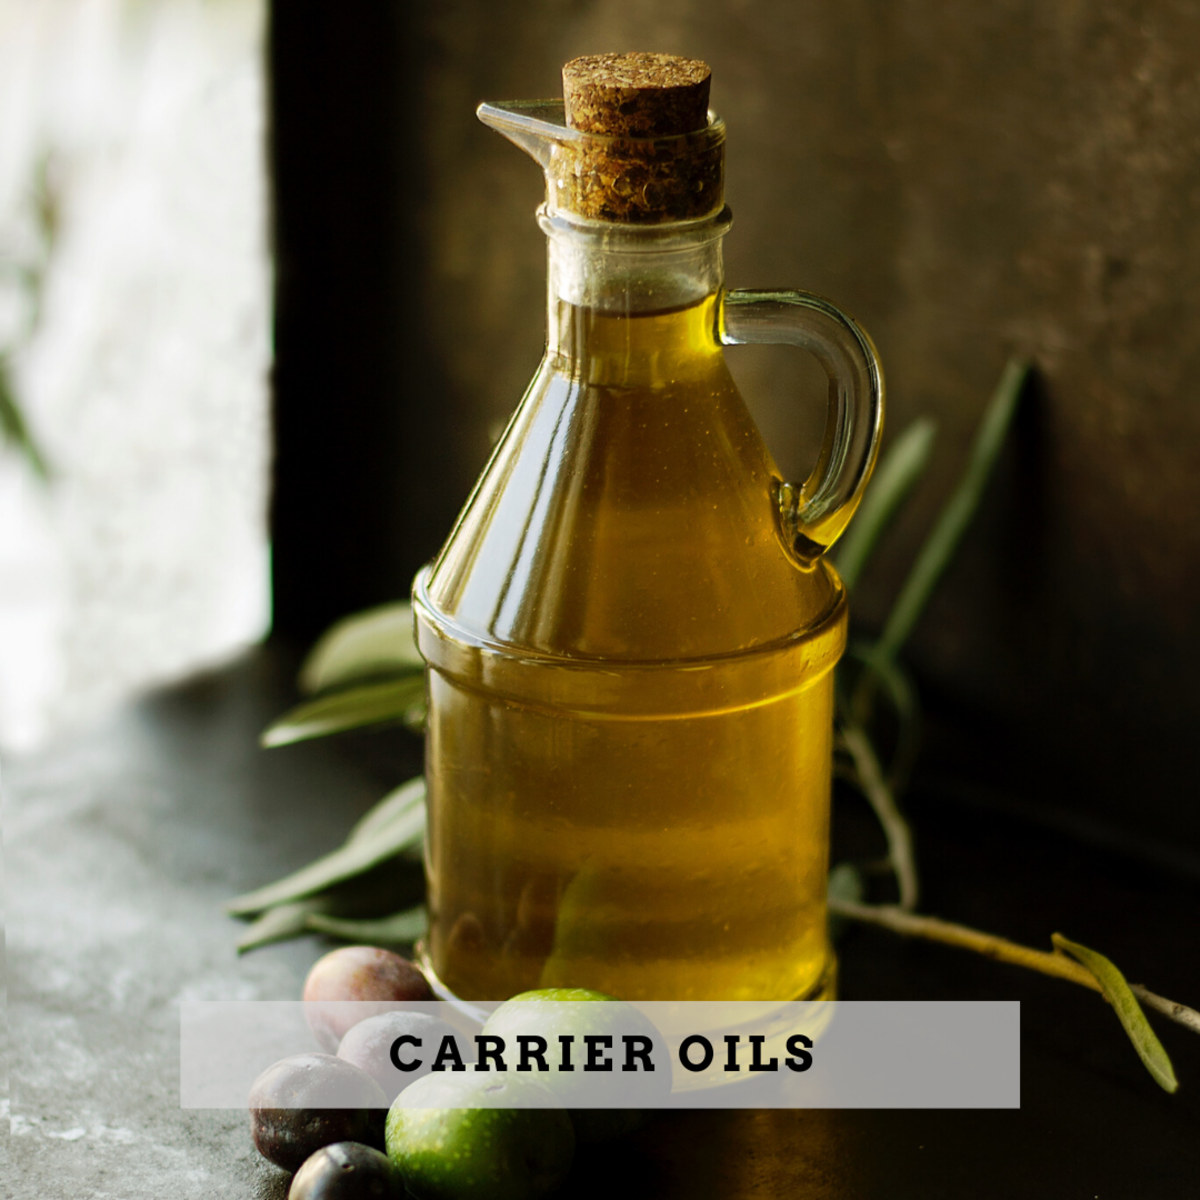 Carrier Oils